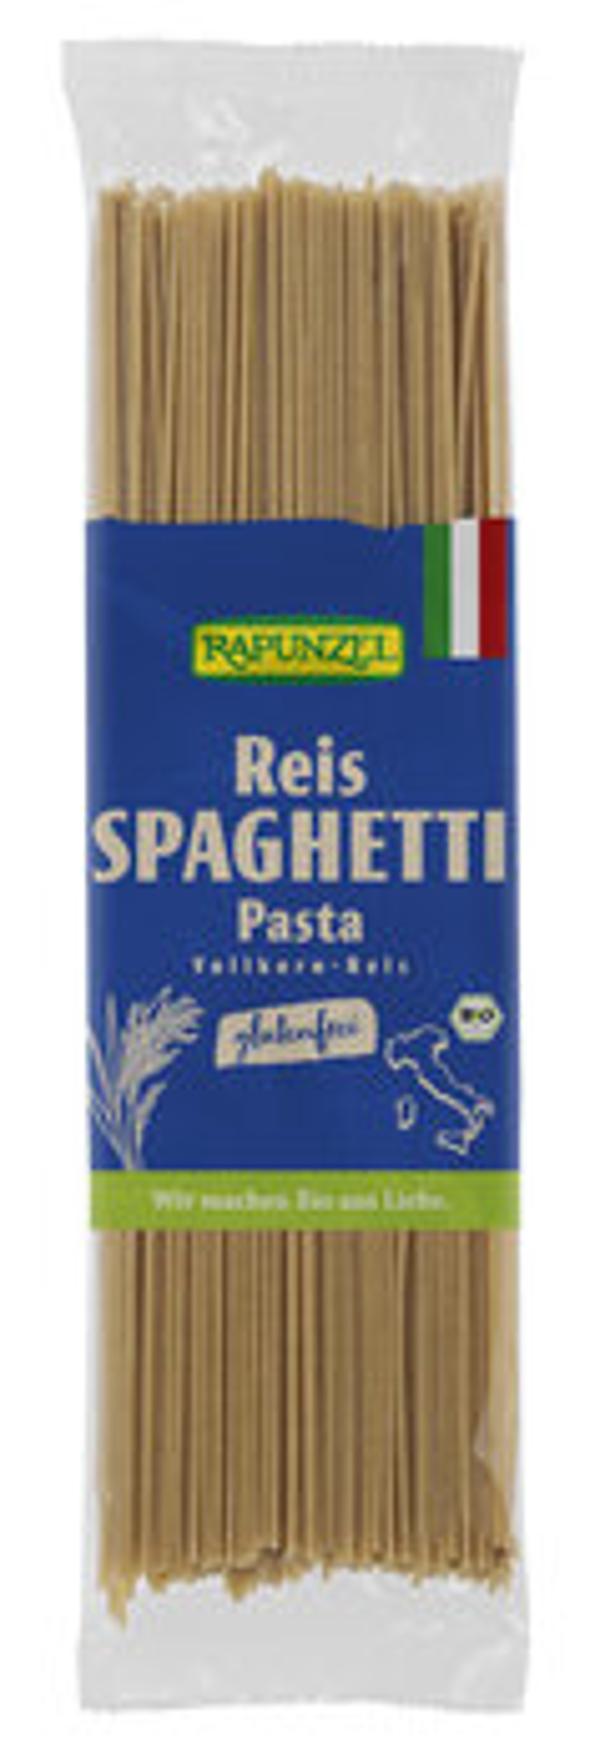 Produktfoto zu Reis-Spaghetti 250gr